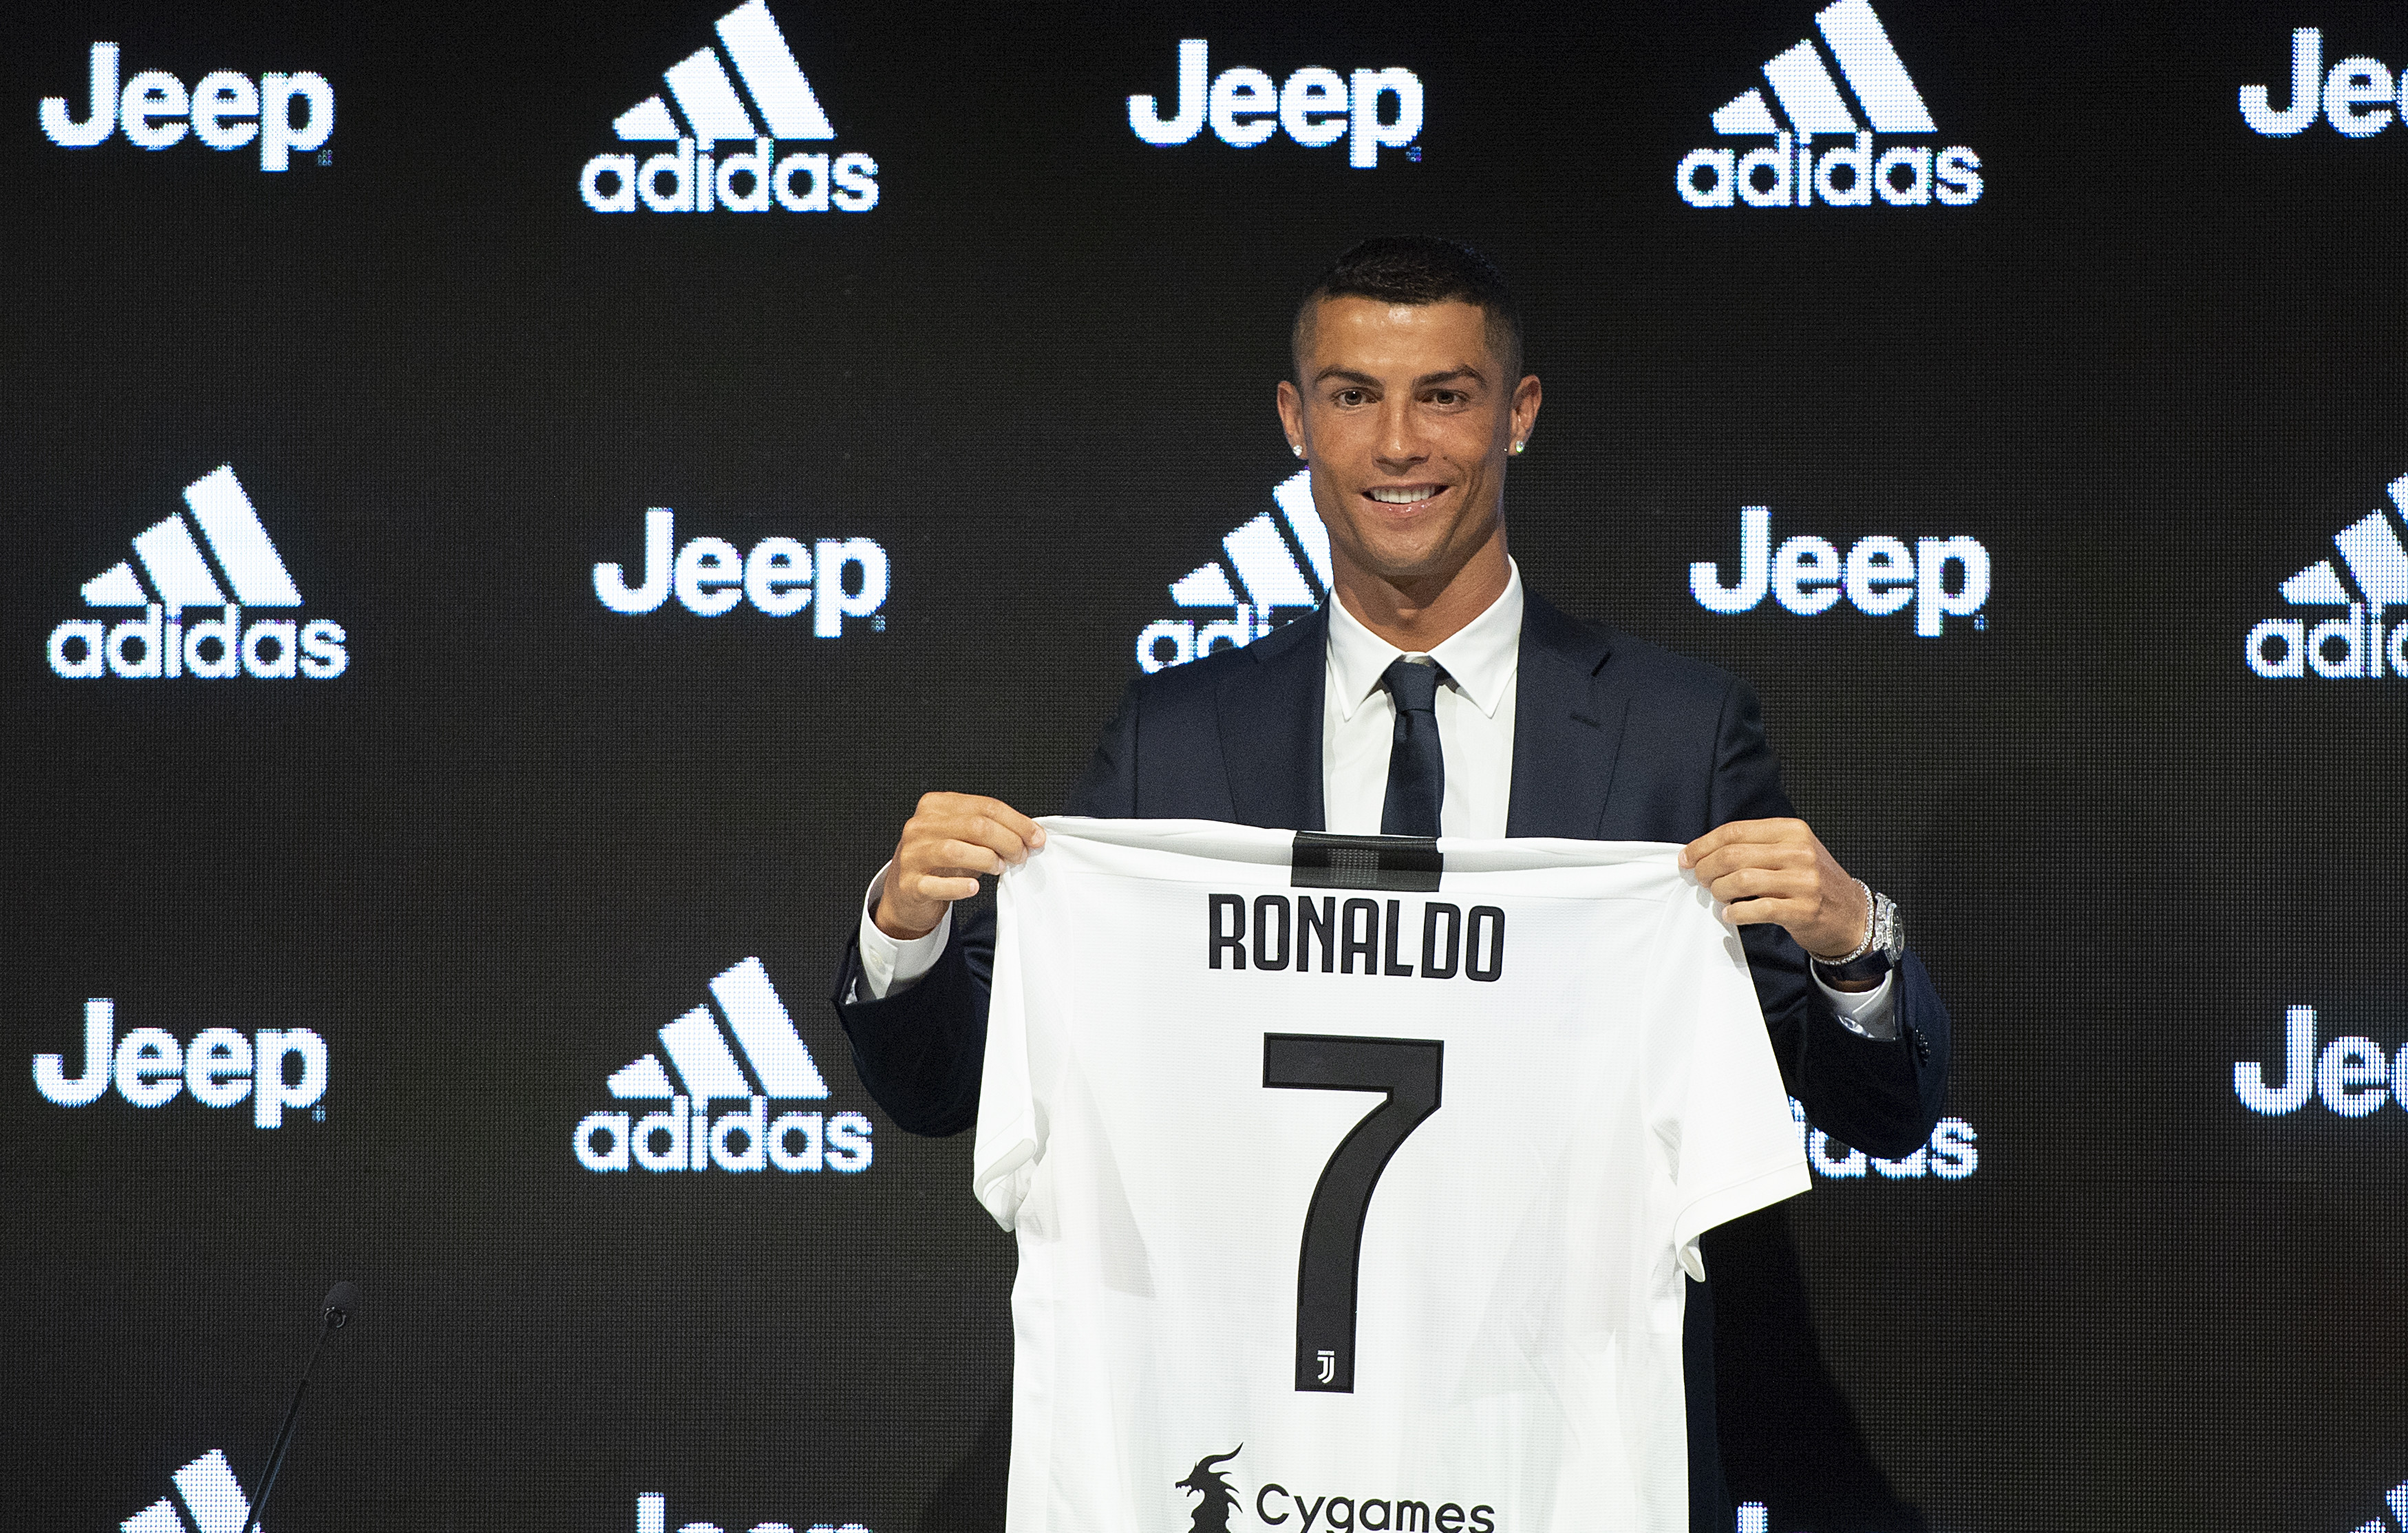 Adidas Sold $60 Million Worth of Ronaldo Jerseys in 24 Hours